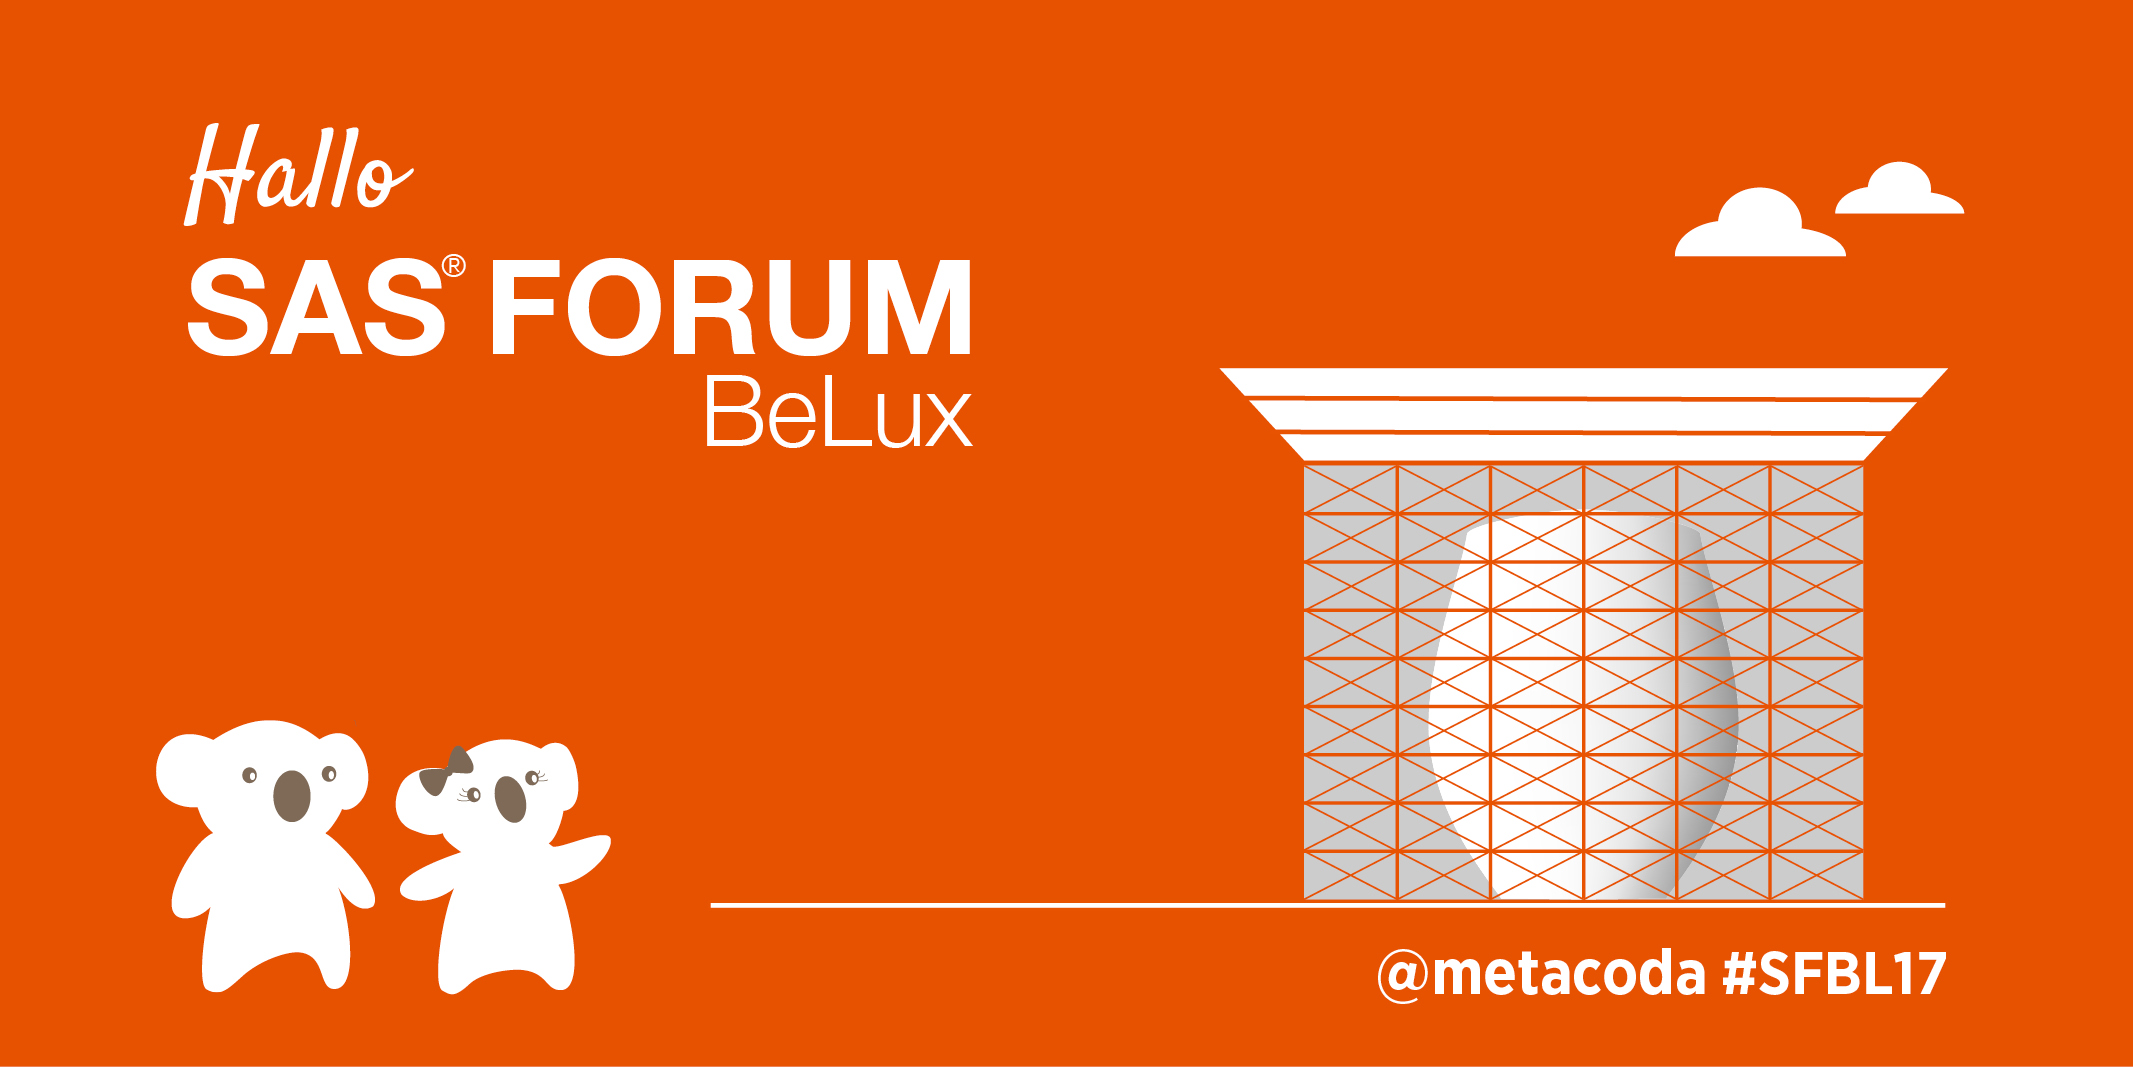 Metacoda SAS Forum BeLux 2017 Social Tile